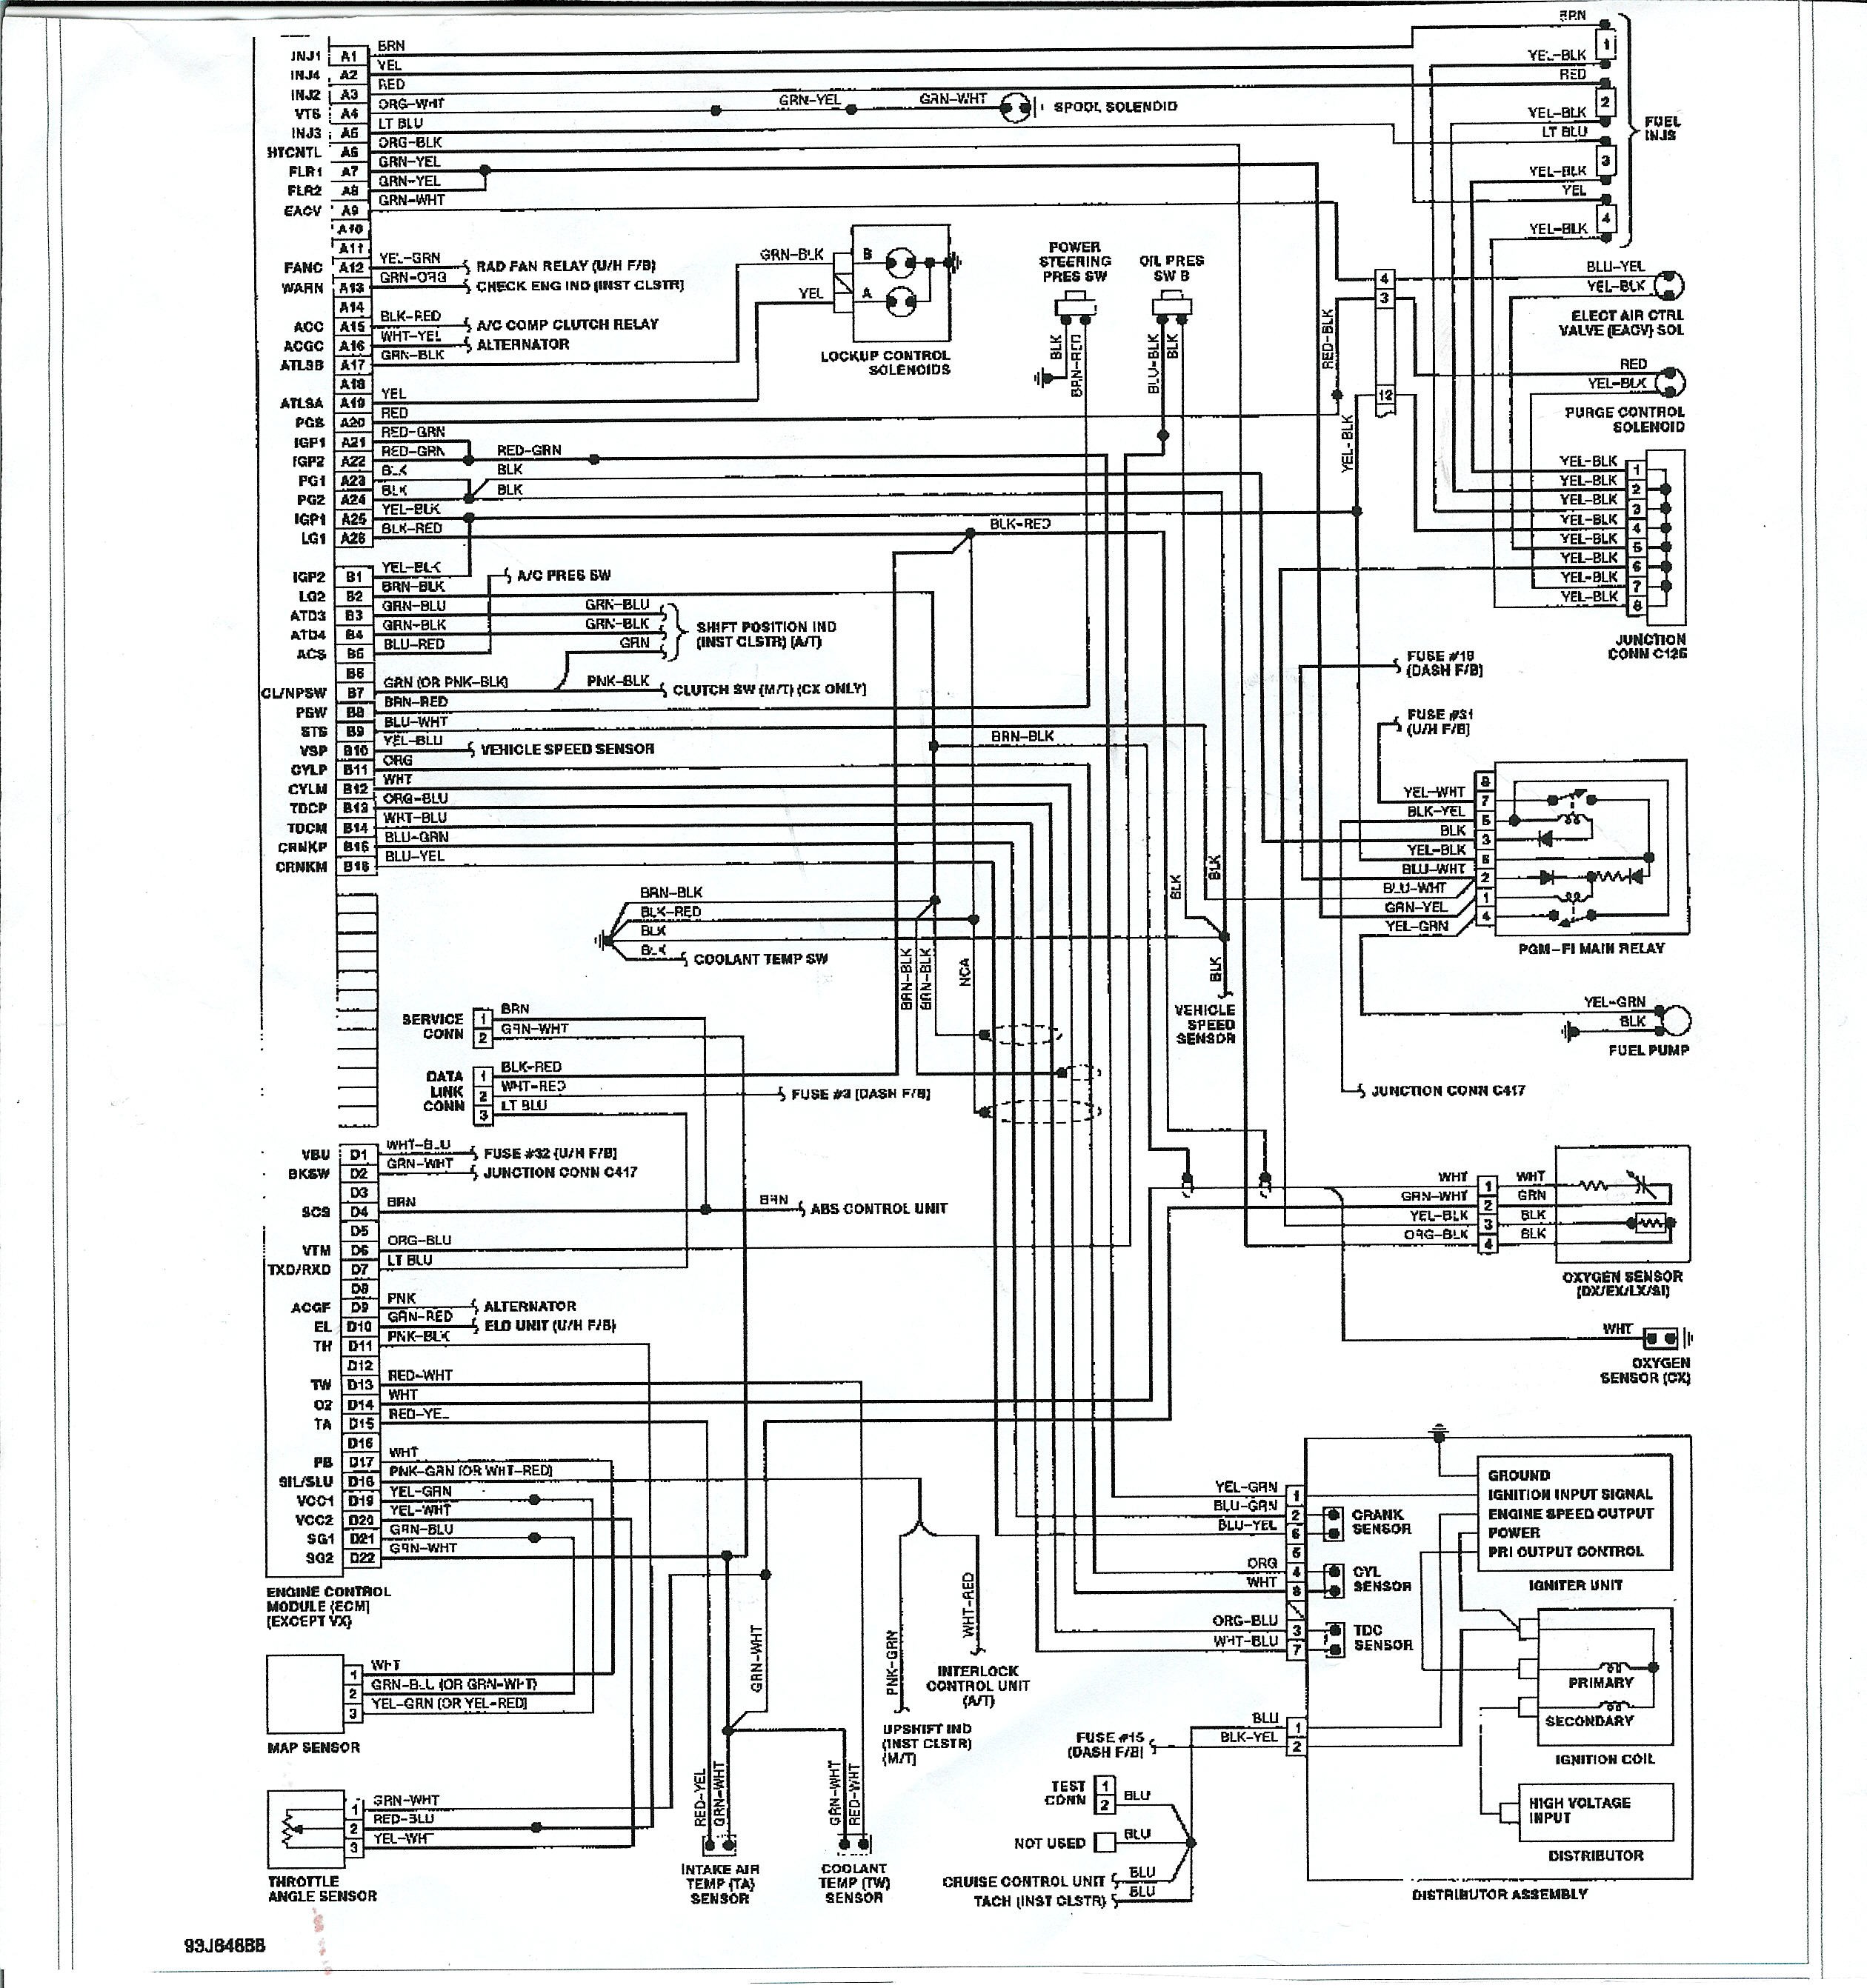 2000 Honda Accord Engine Diagram Vw Transporter Wiring Diagram 95 Honda Civic Transmission Diagram Of 2000 Honda Accord Engine Diagram